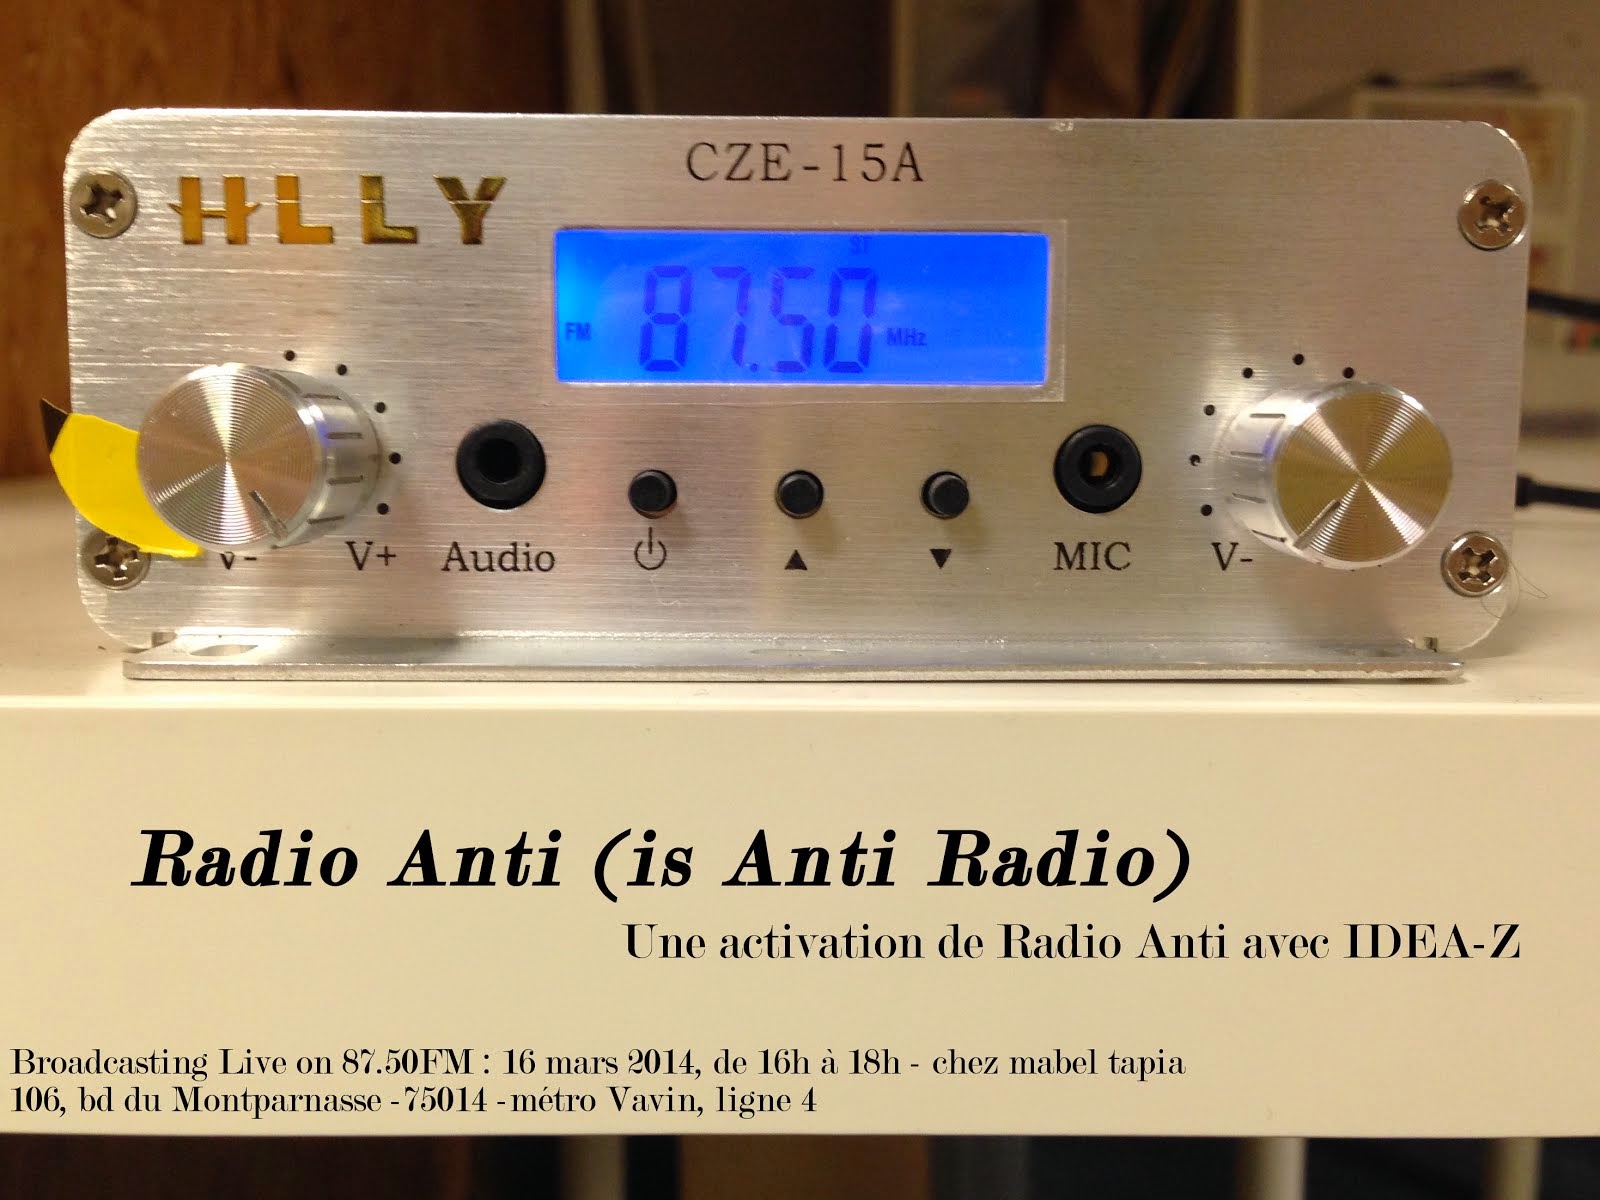 Radio Anti (is Anti Radio)